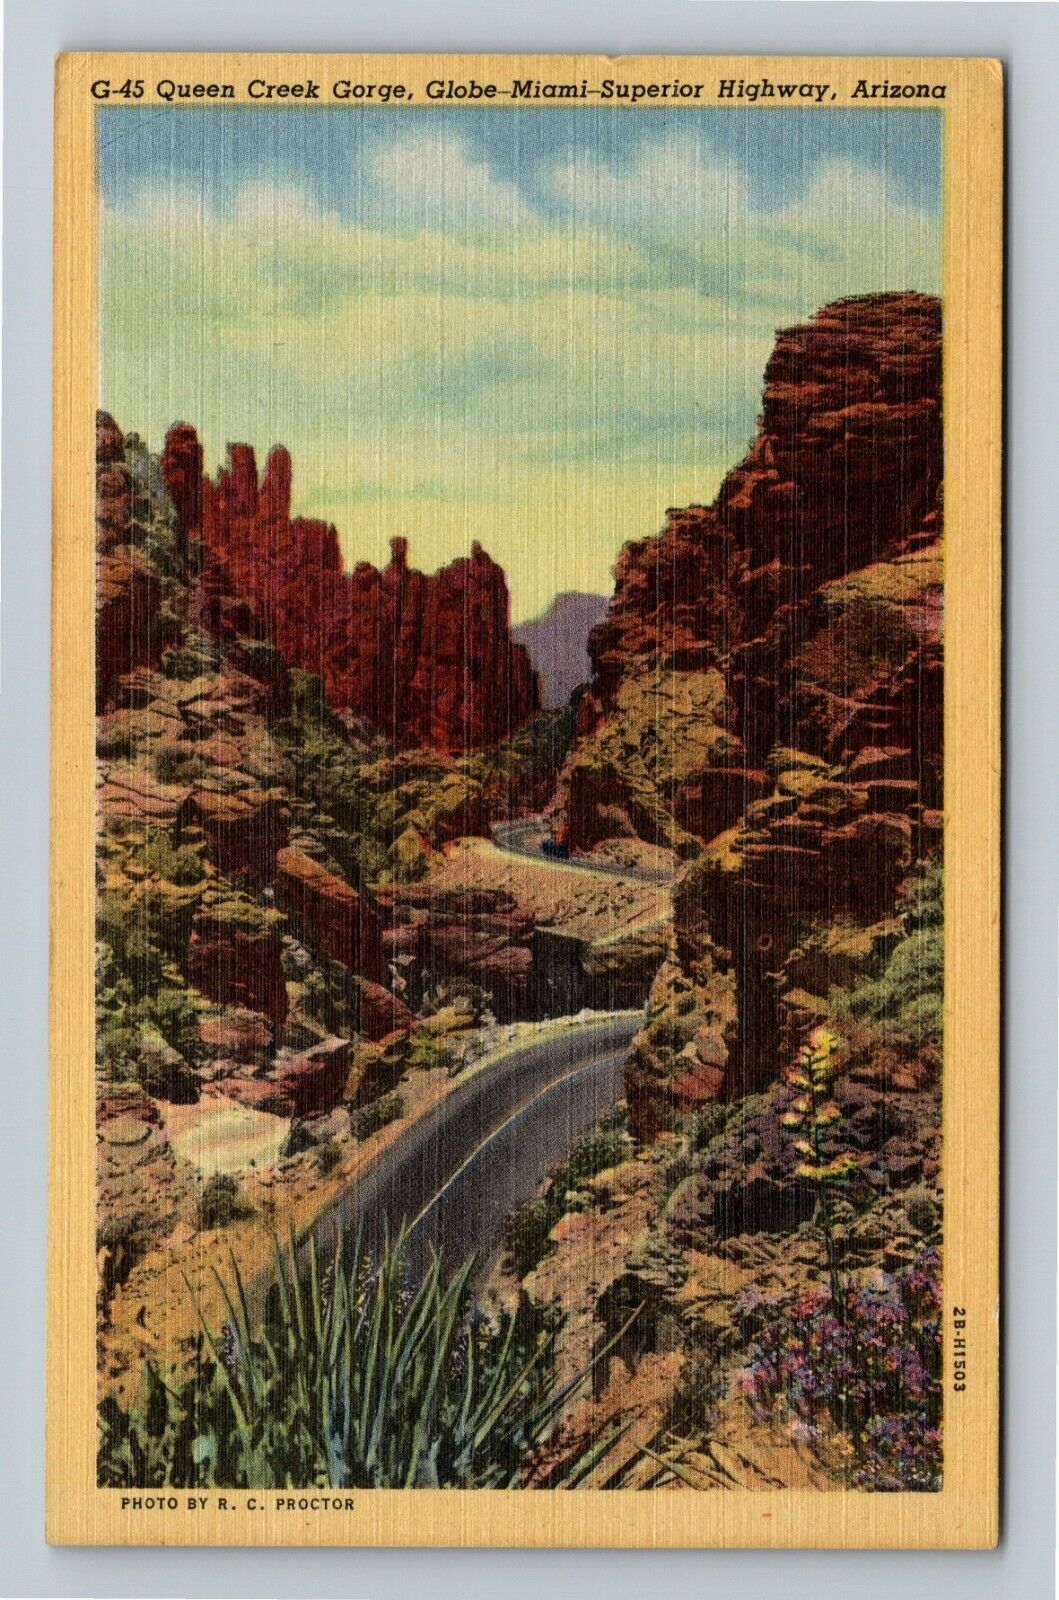 Globe Miami Superior Highway AZ-Arizona Queen Creek Gorge Vintage Postcard